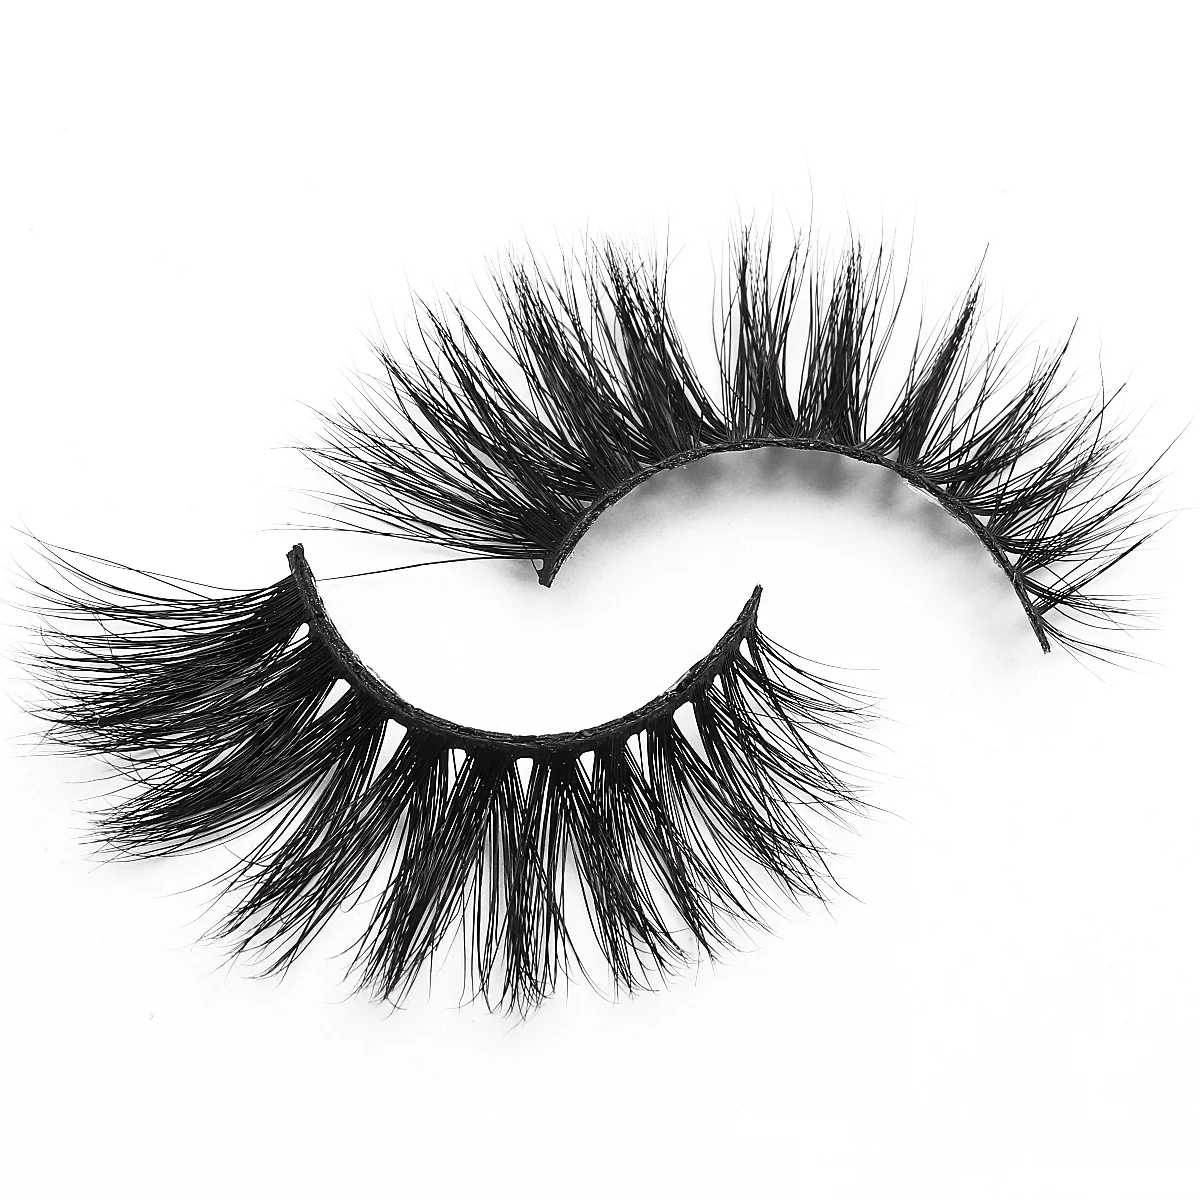 natural mink hair eyelashes private label 3d mink lashes